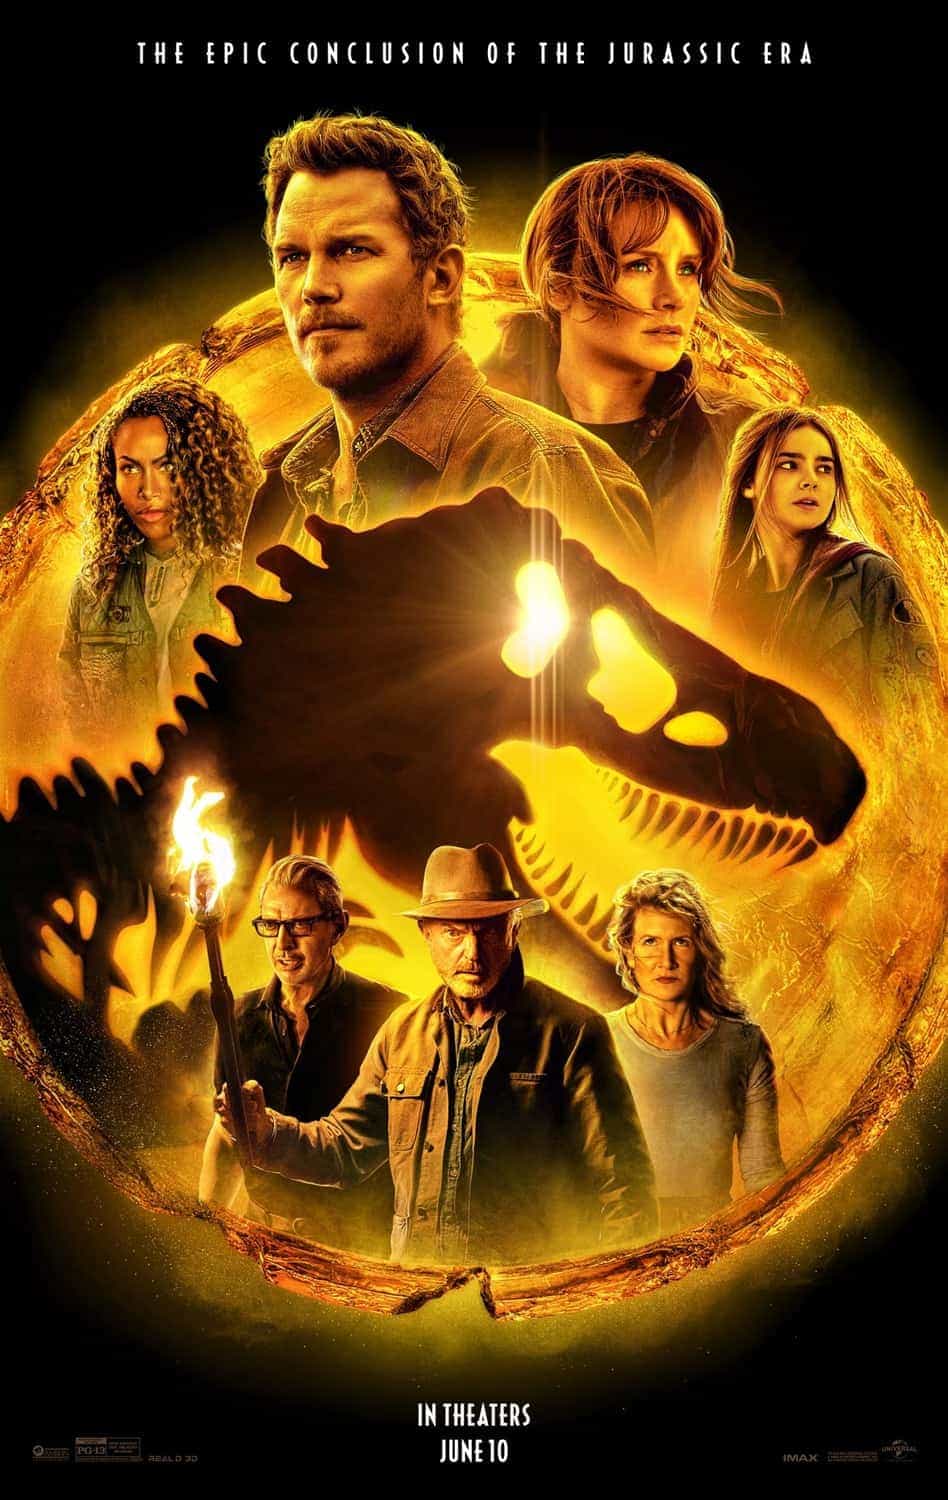 New poster released for Jurassic World: Dominion starring Bryce Dallas Howard - movie UK release date 10th June 2022 #jurassicworlddominion